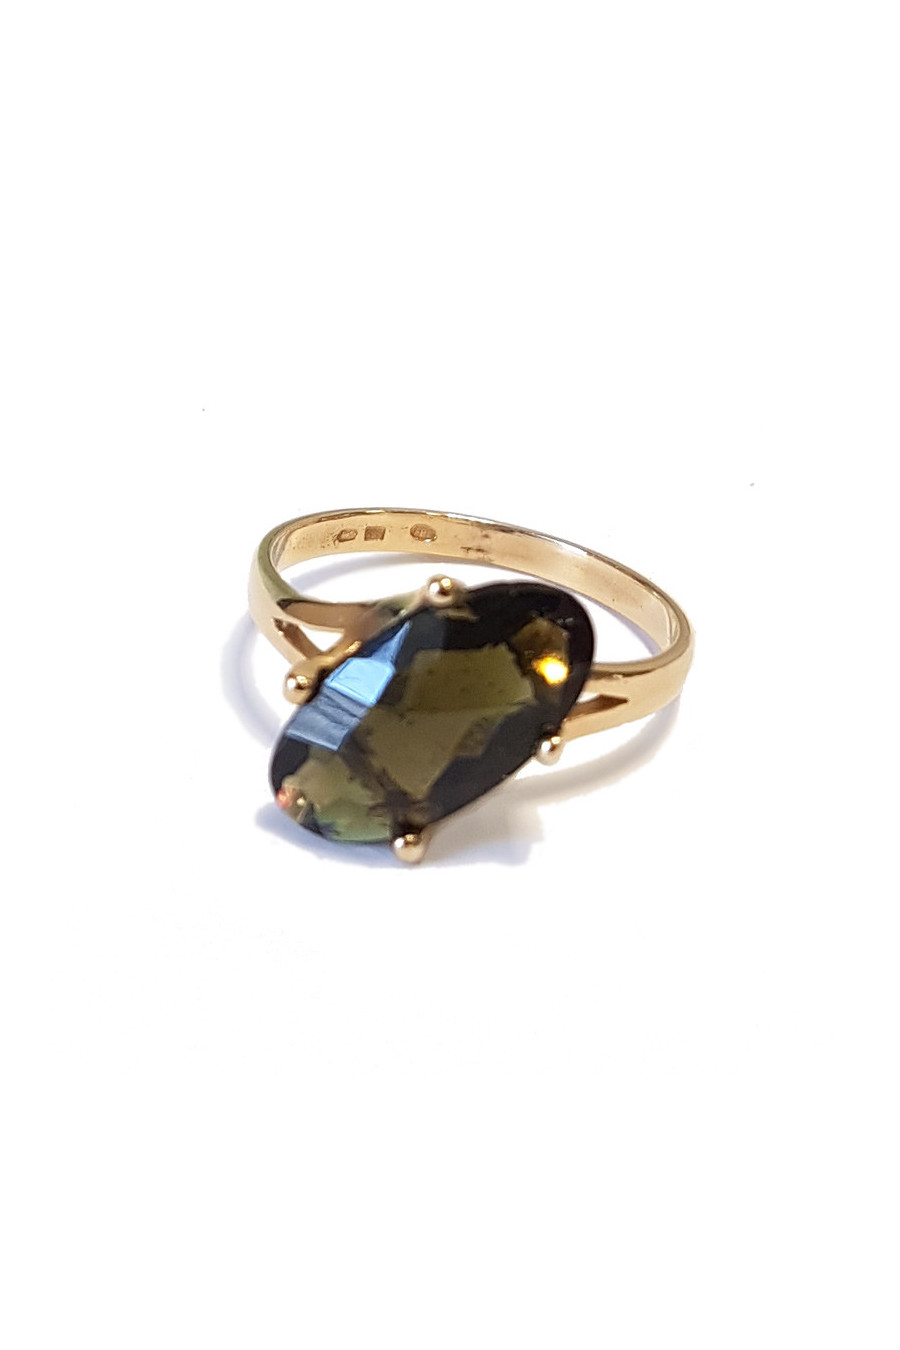 Gold ring with moldavite